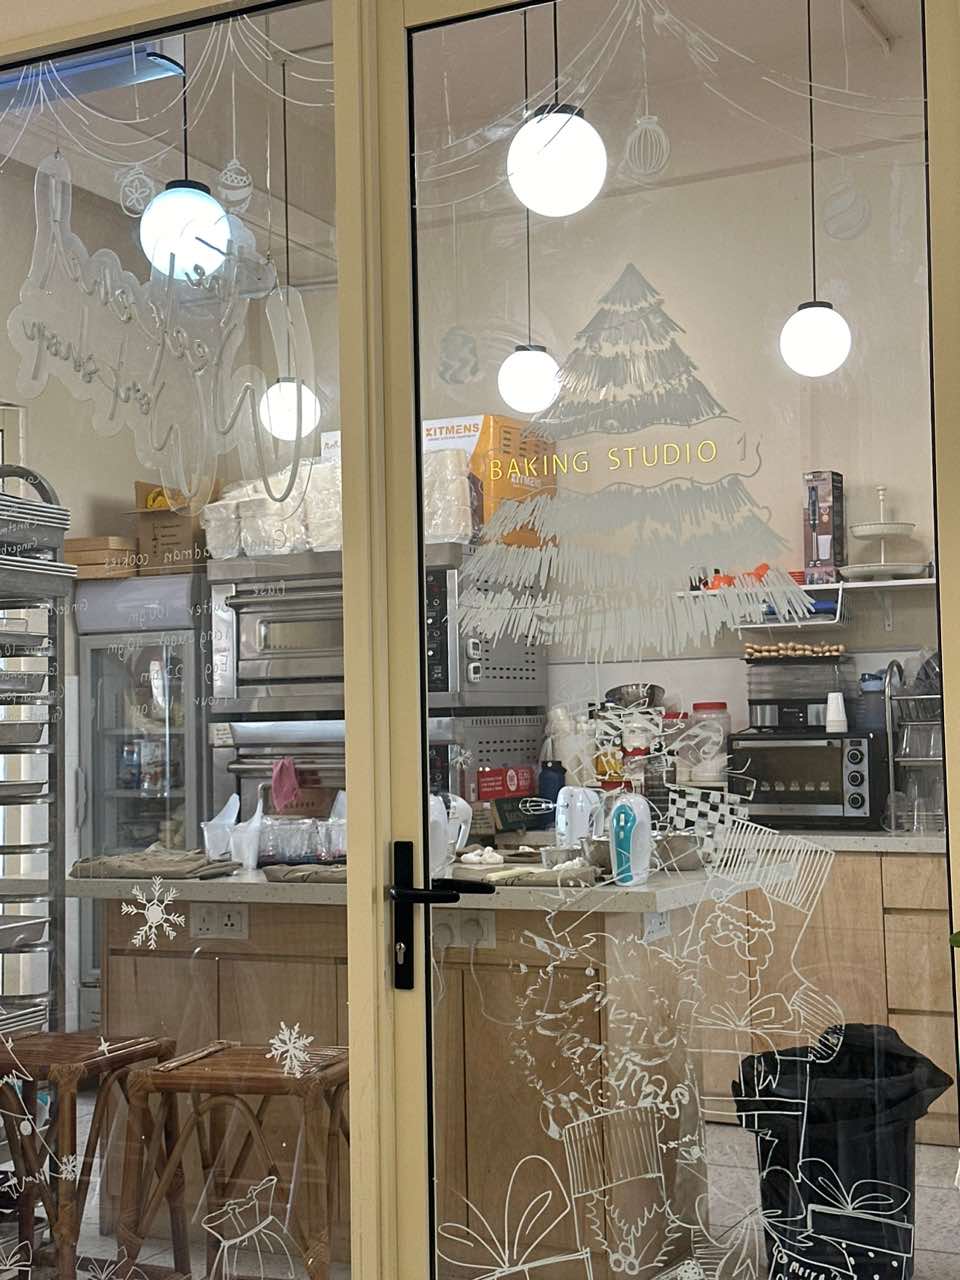 Baking studio at a cafe